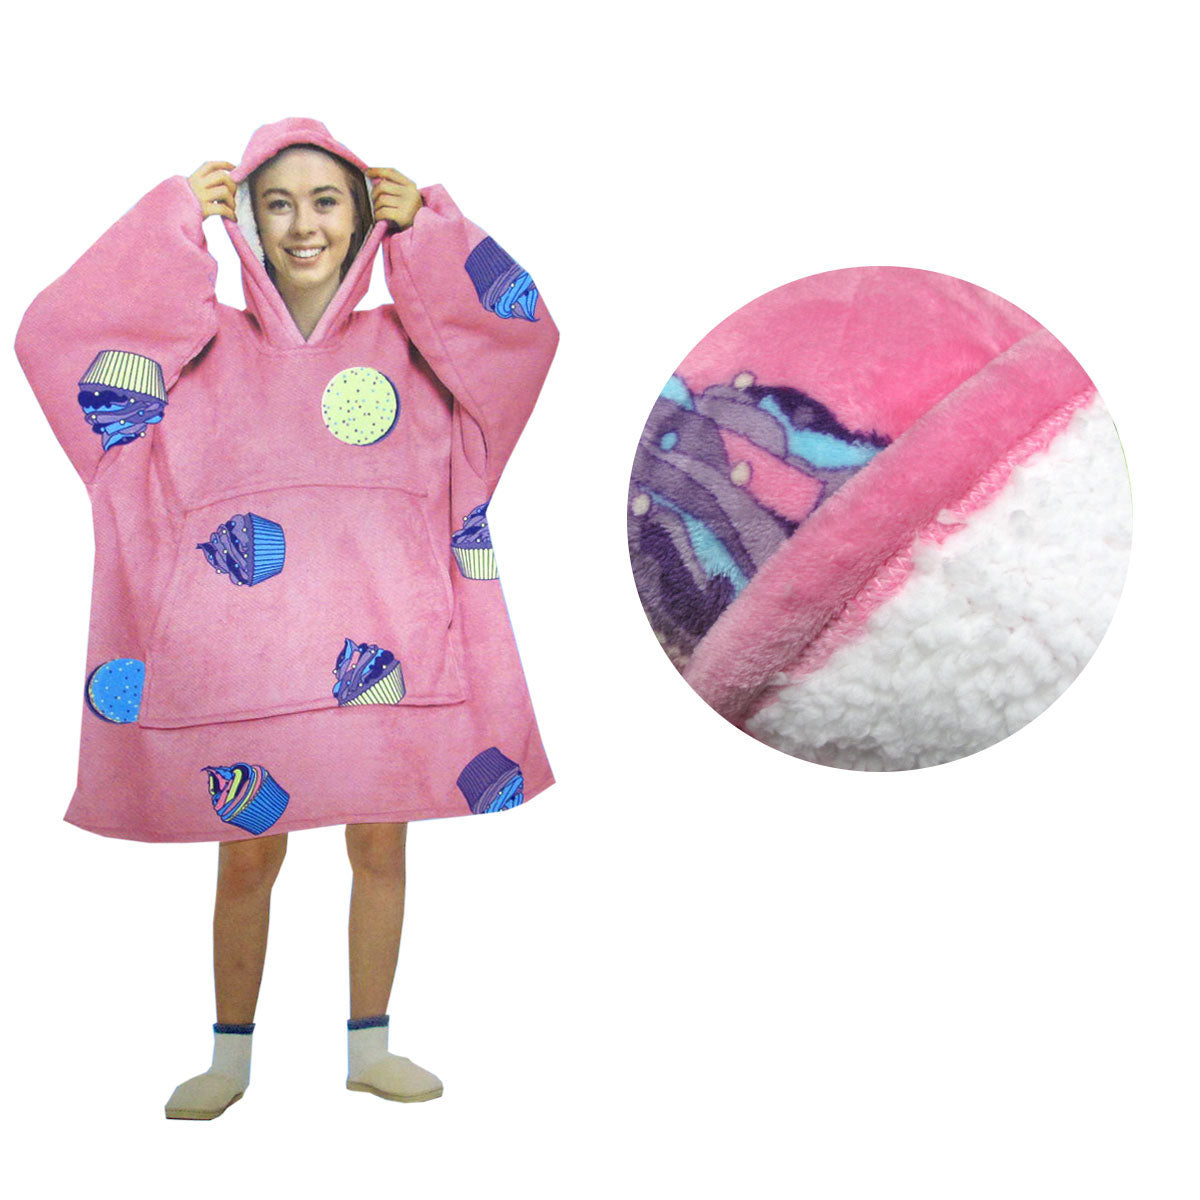 Blanket Hoodie with Sherpa Reverse Pink Cupcakes - Newstart Furniture